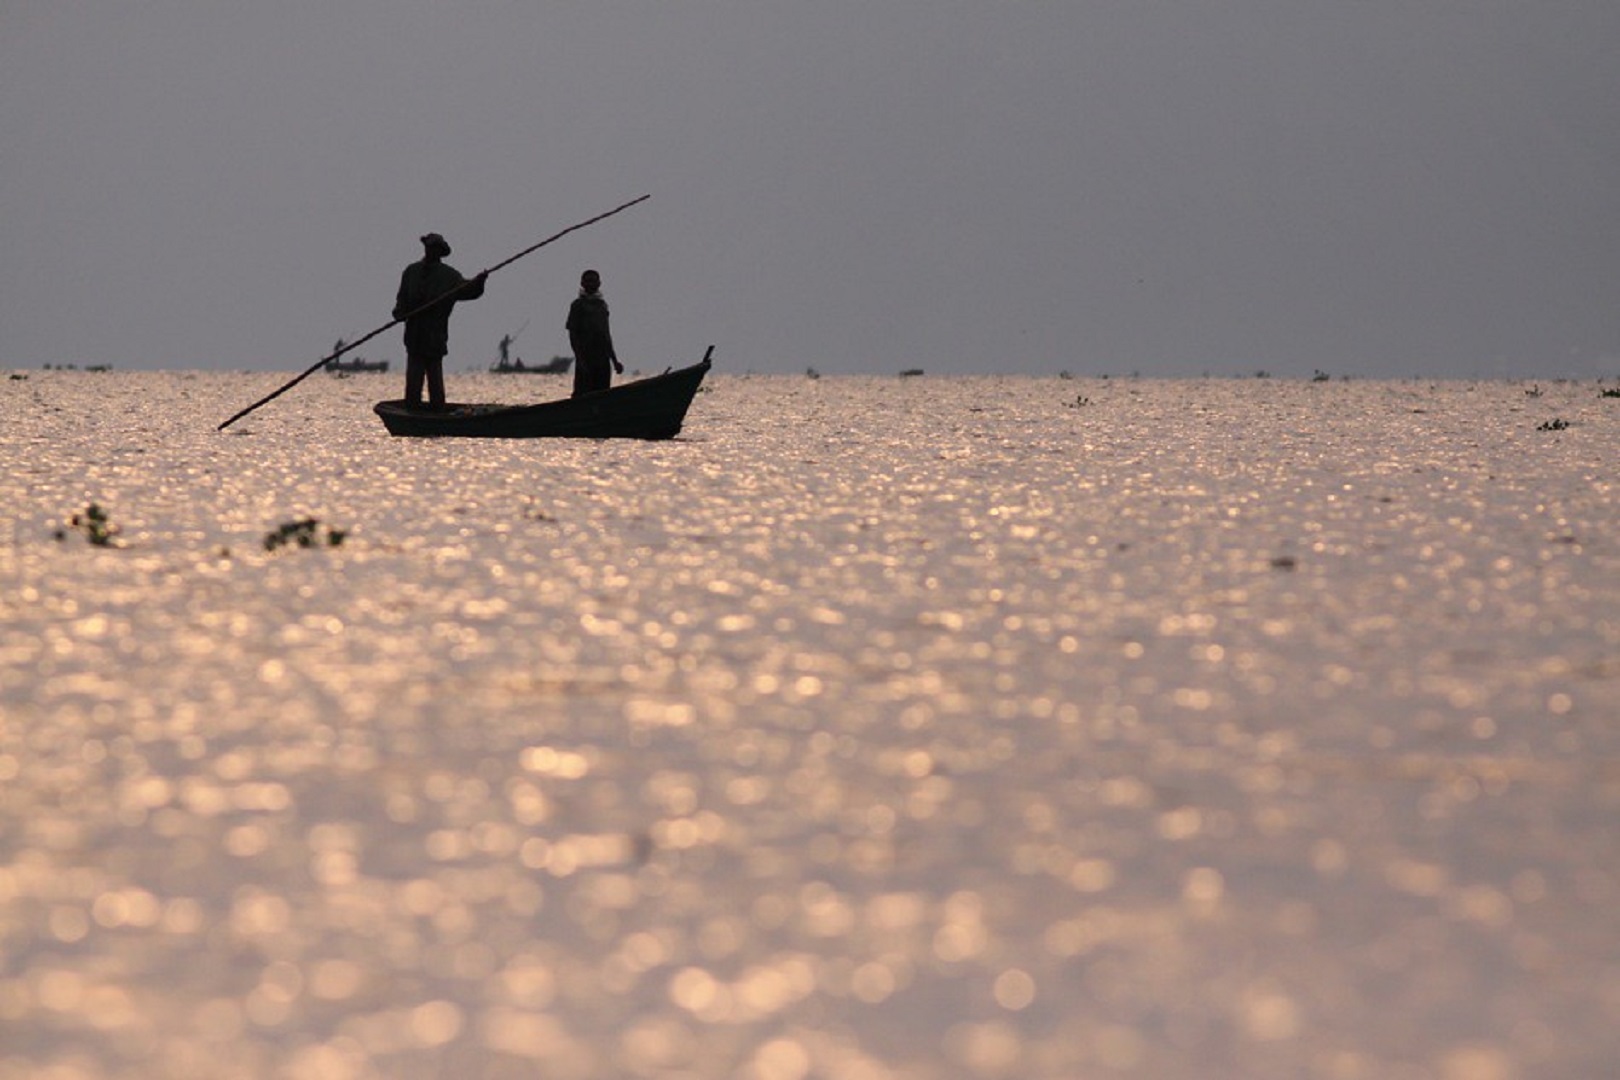 Fishing on Lake Albert, western Uganda